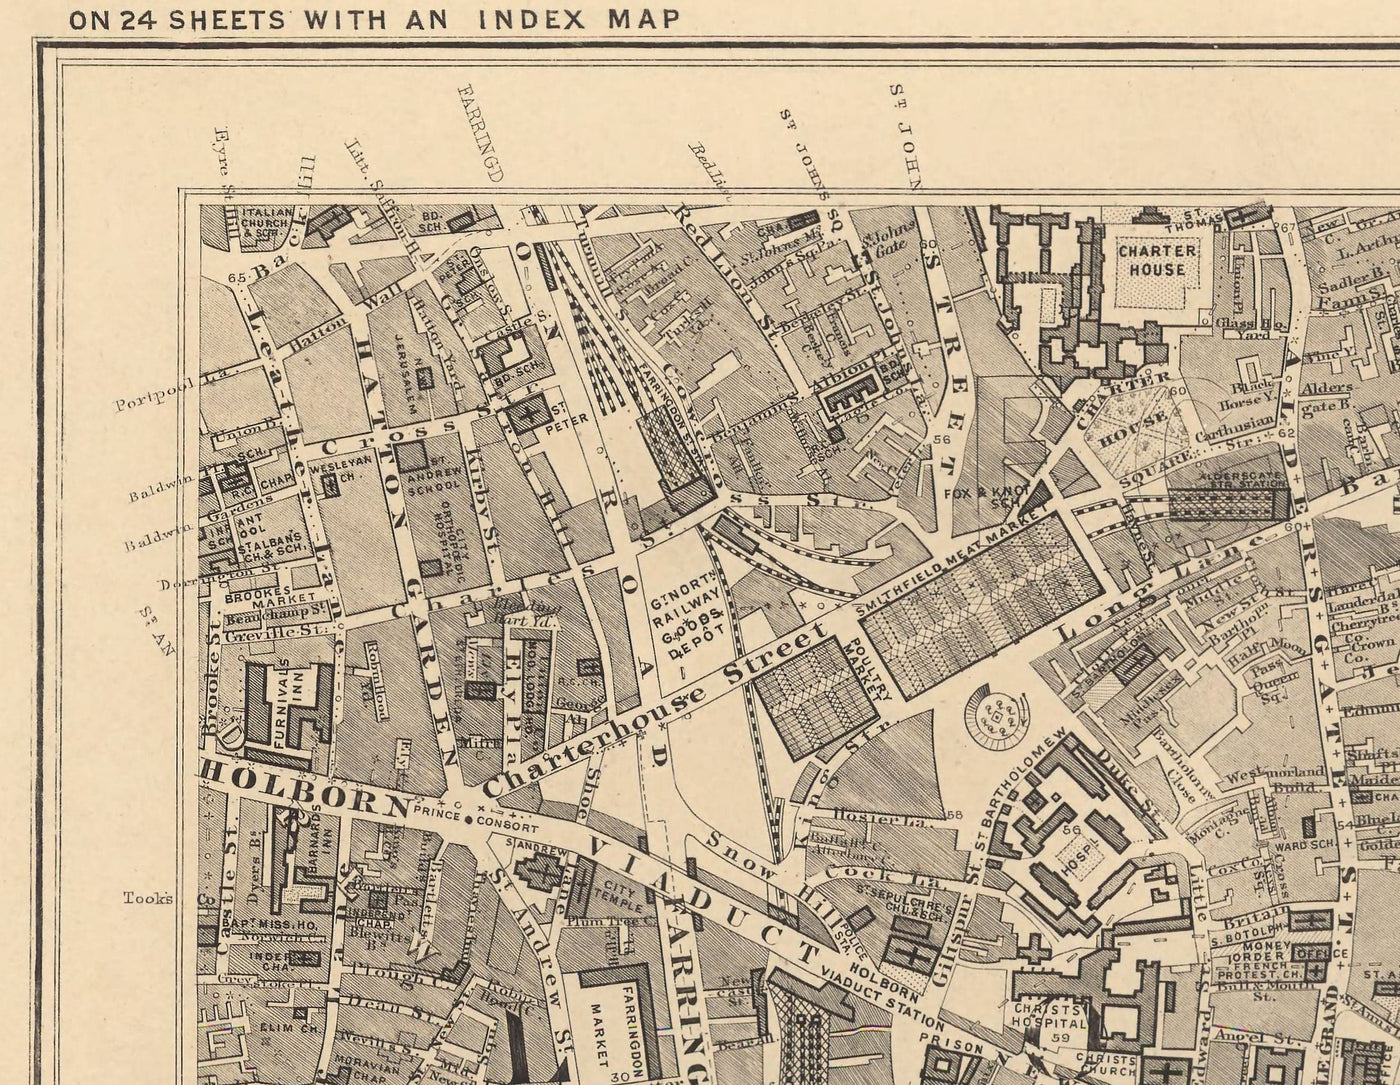 Alte Karte der Stadt London von Edward Stanford, 1862 - London Bridge, St. Pauls, Liverpool St, Bank, Finsbury, Southwark - EC1, EC2, EC3, EC4, E1, E1W, SE1, SE16